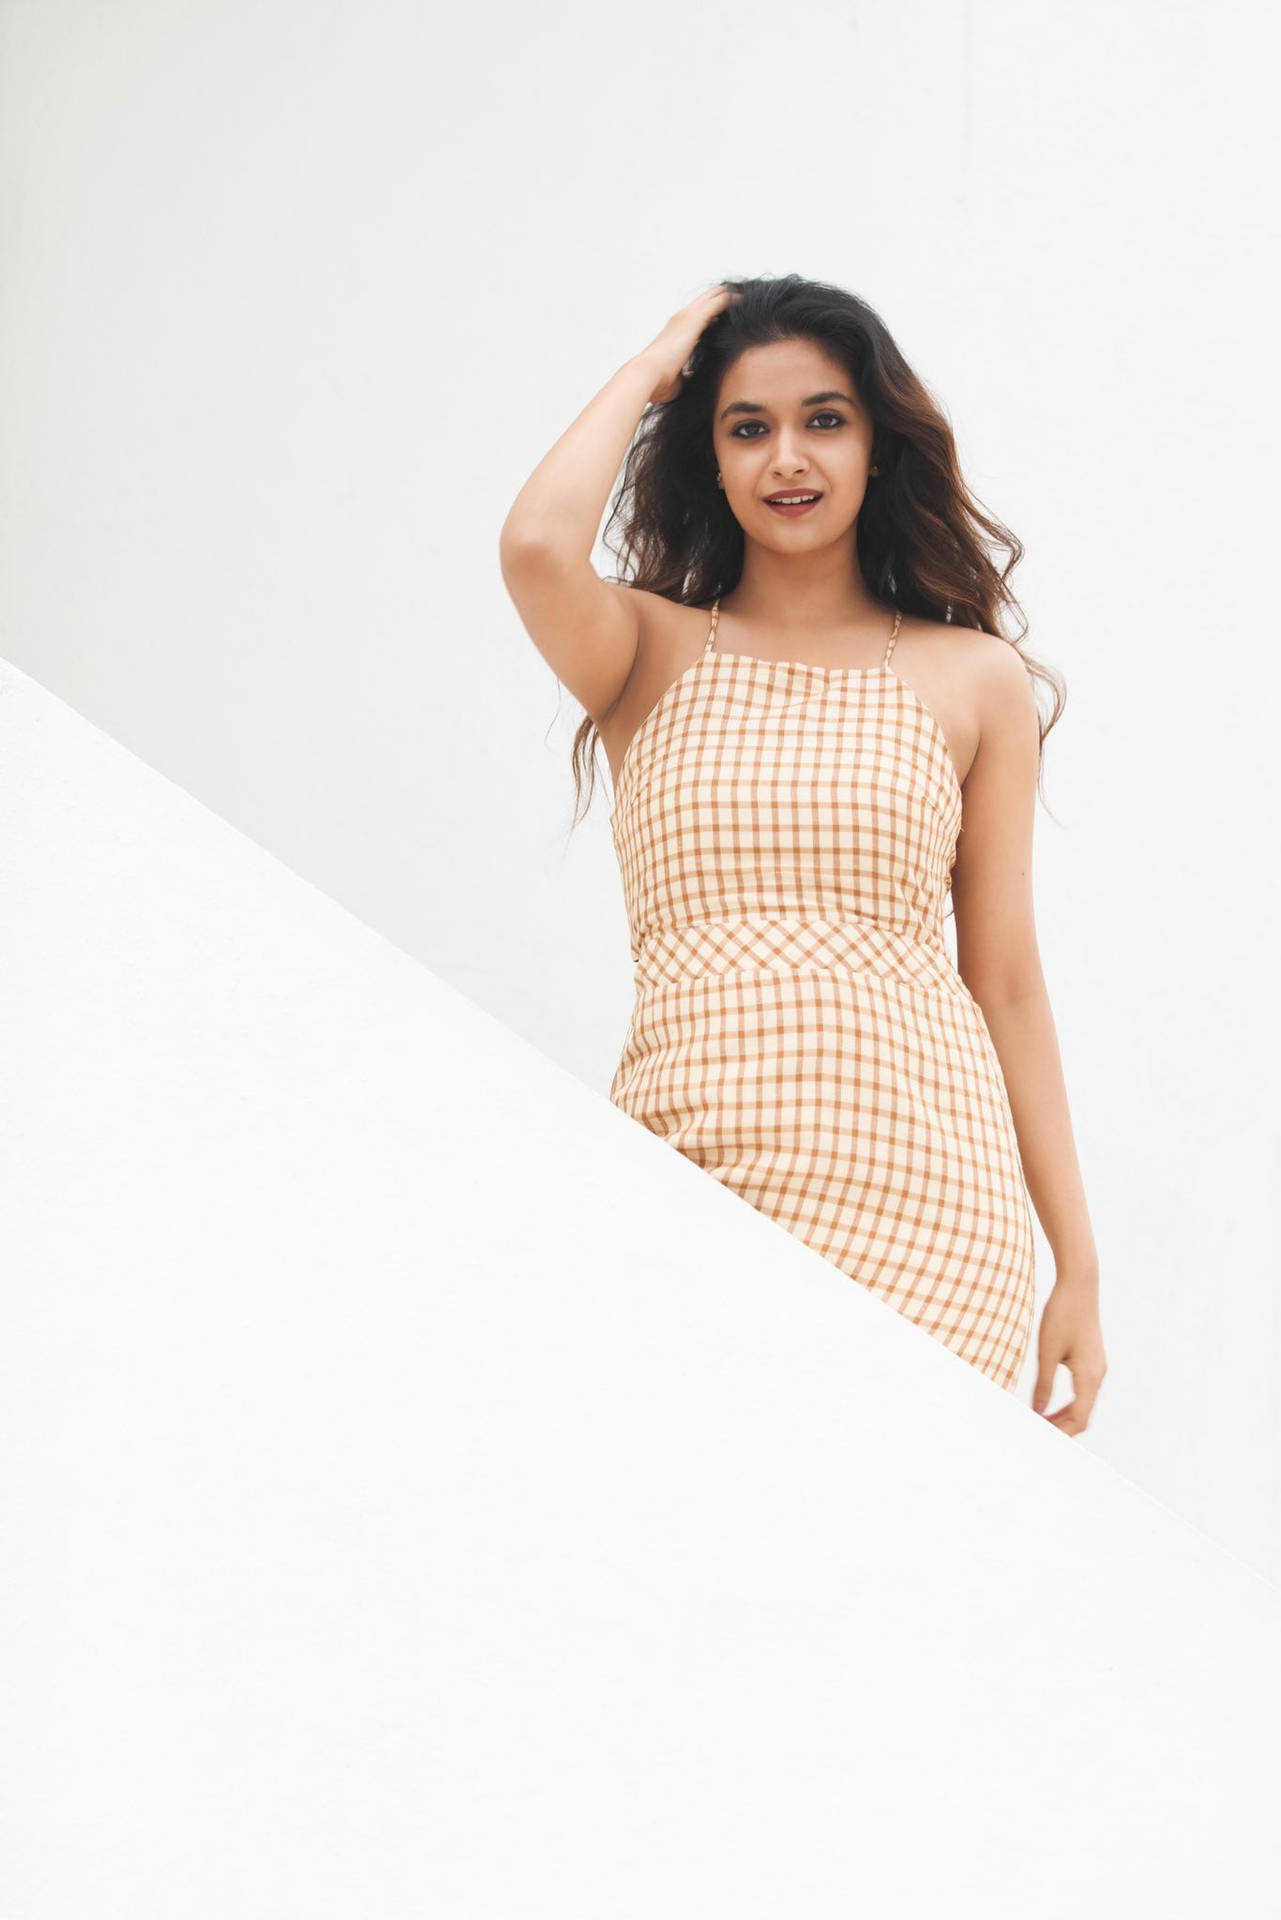 Keerthi Suresh Checkered Dress Wallpaper